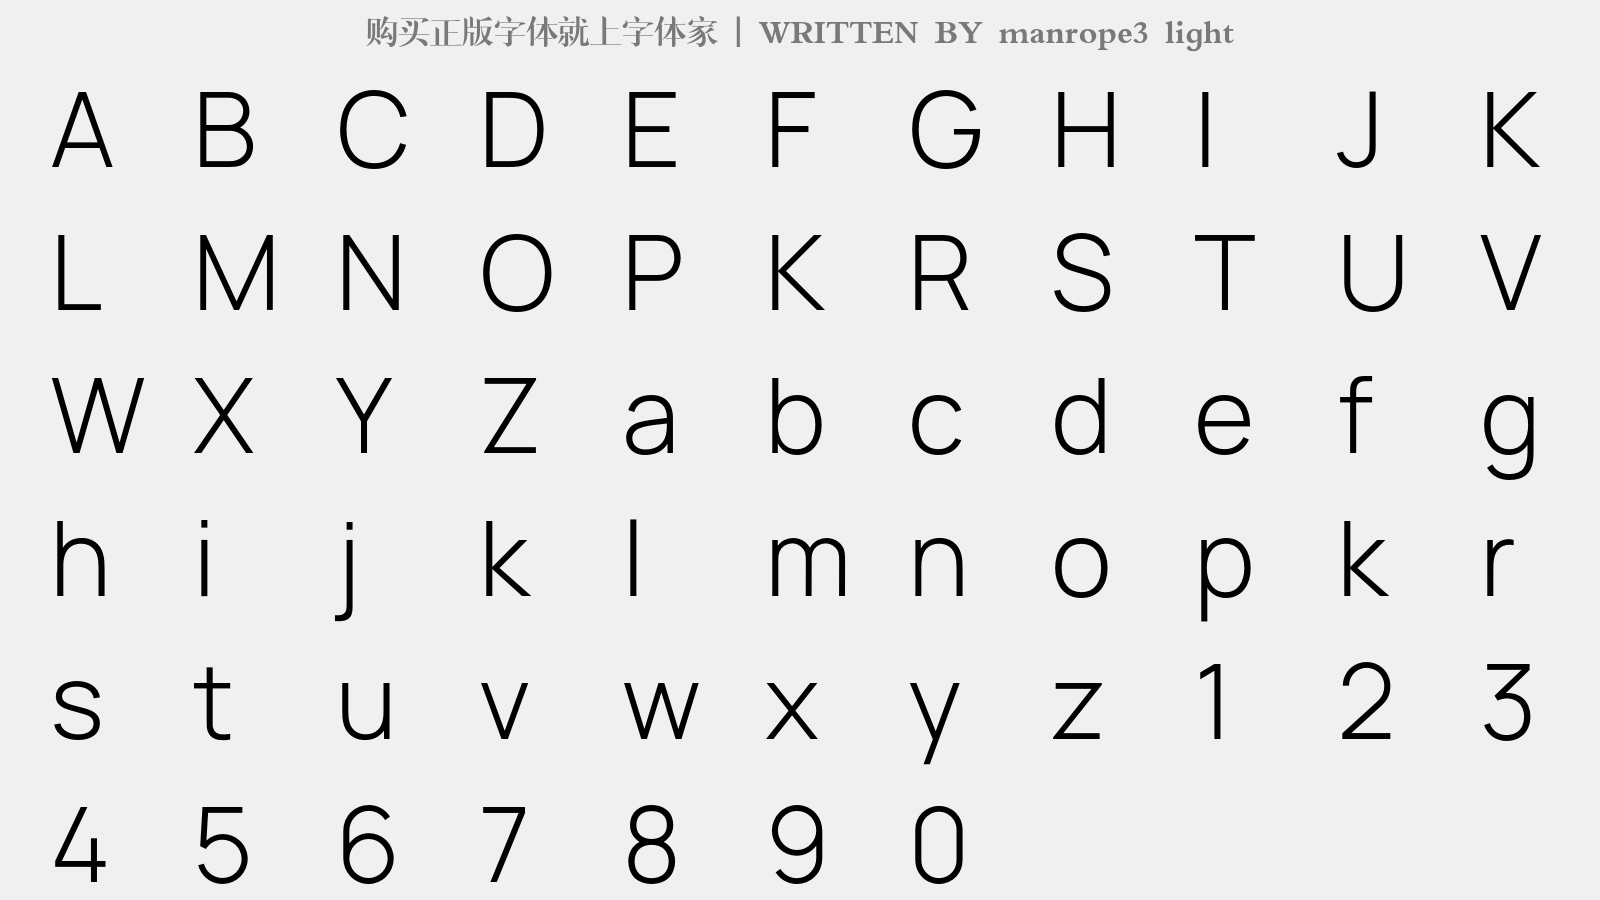 manrope3 light - 大写字母/小写字母/数字